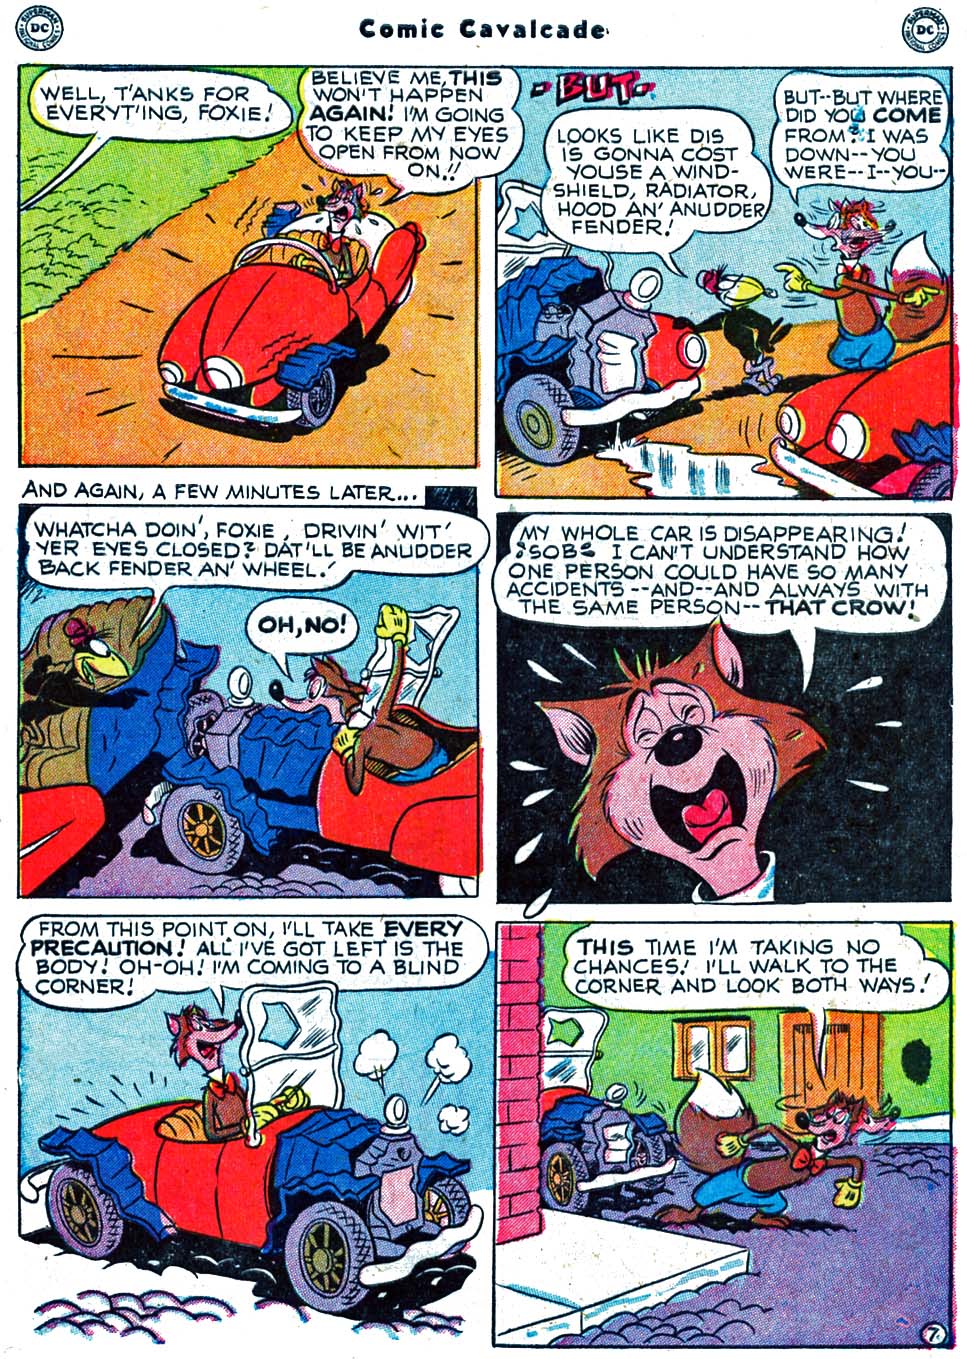 Comic Cavalcade issue 39 - Page 9